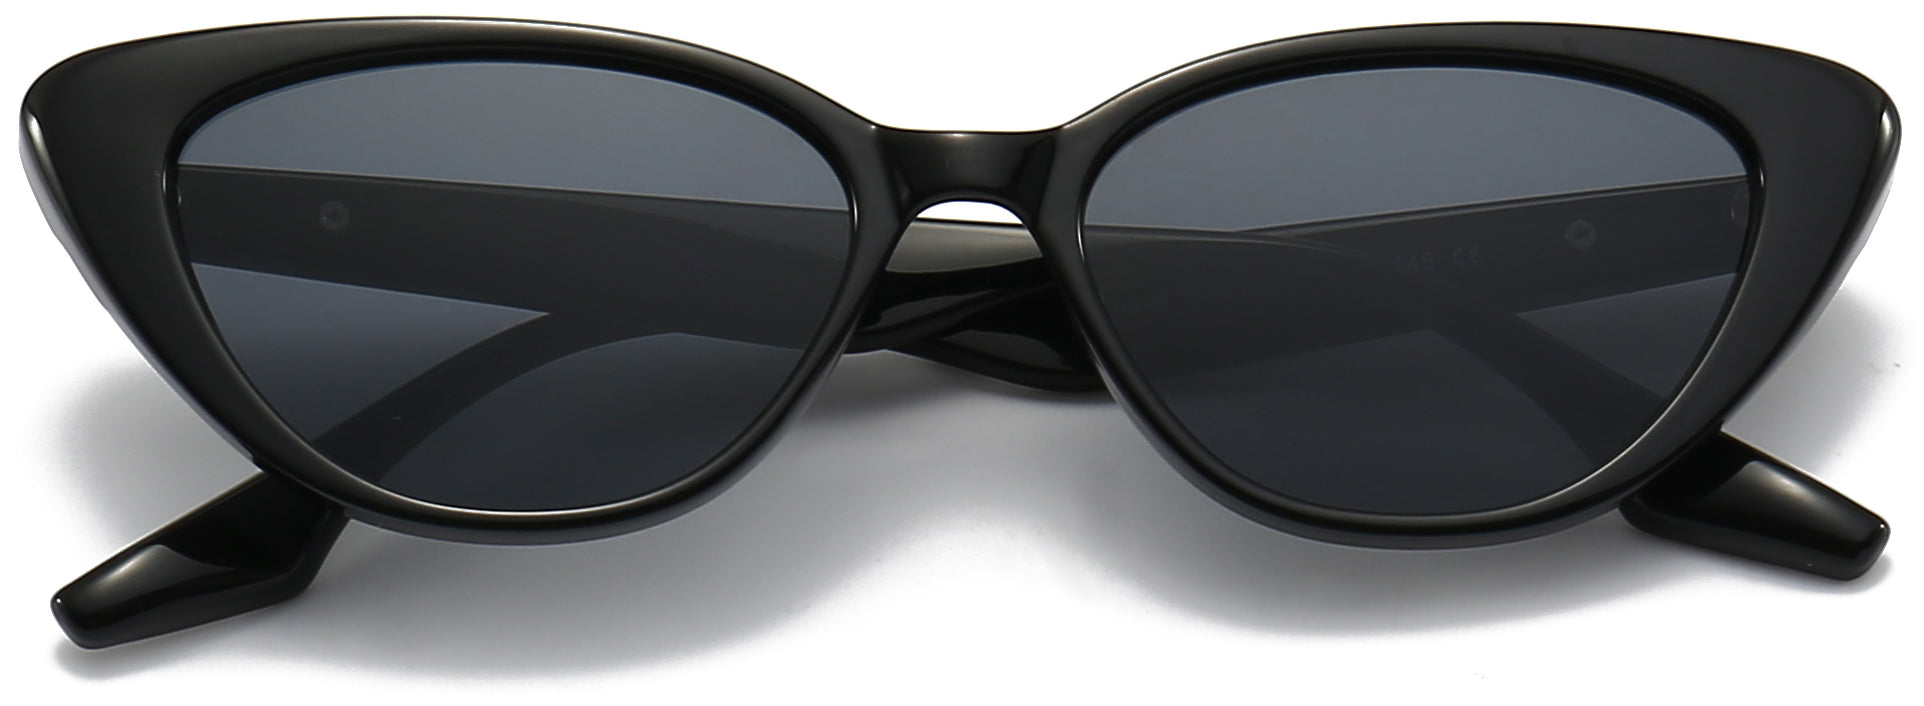 Ada Black TR90 Sunglasses from ANRRI